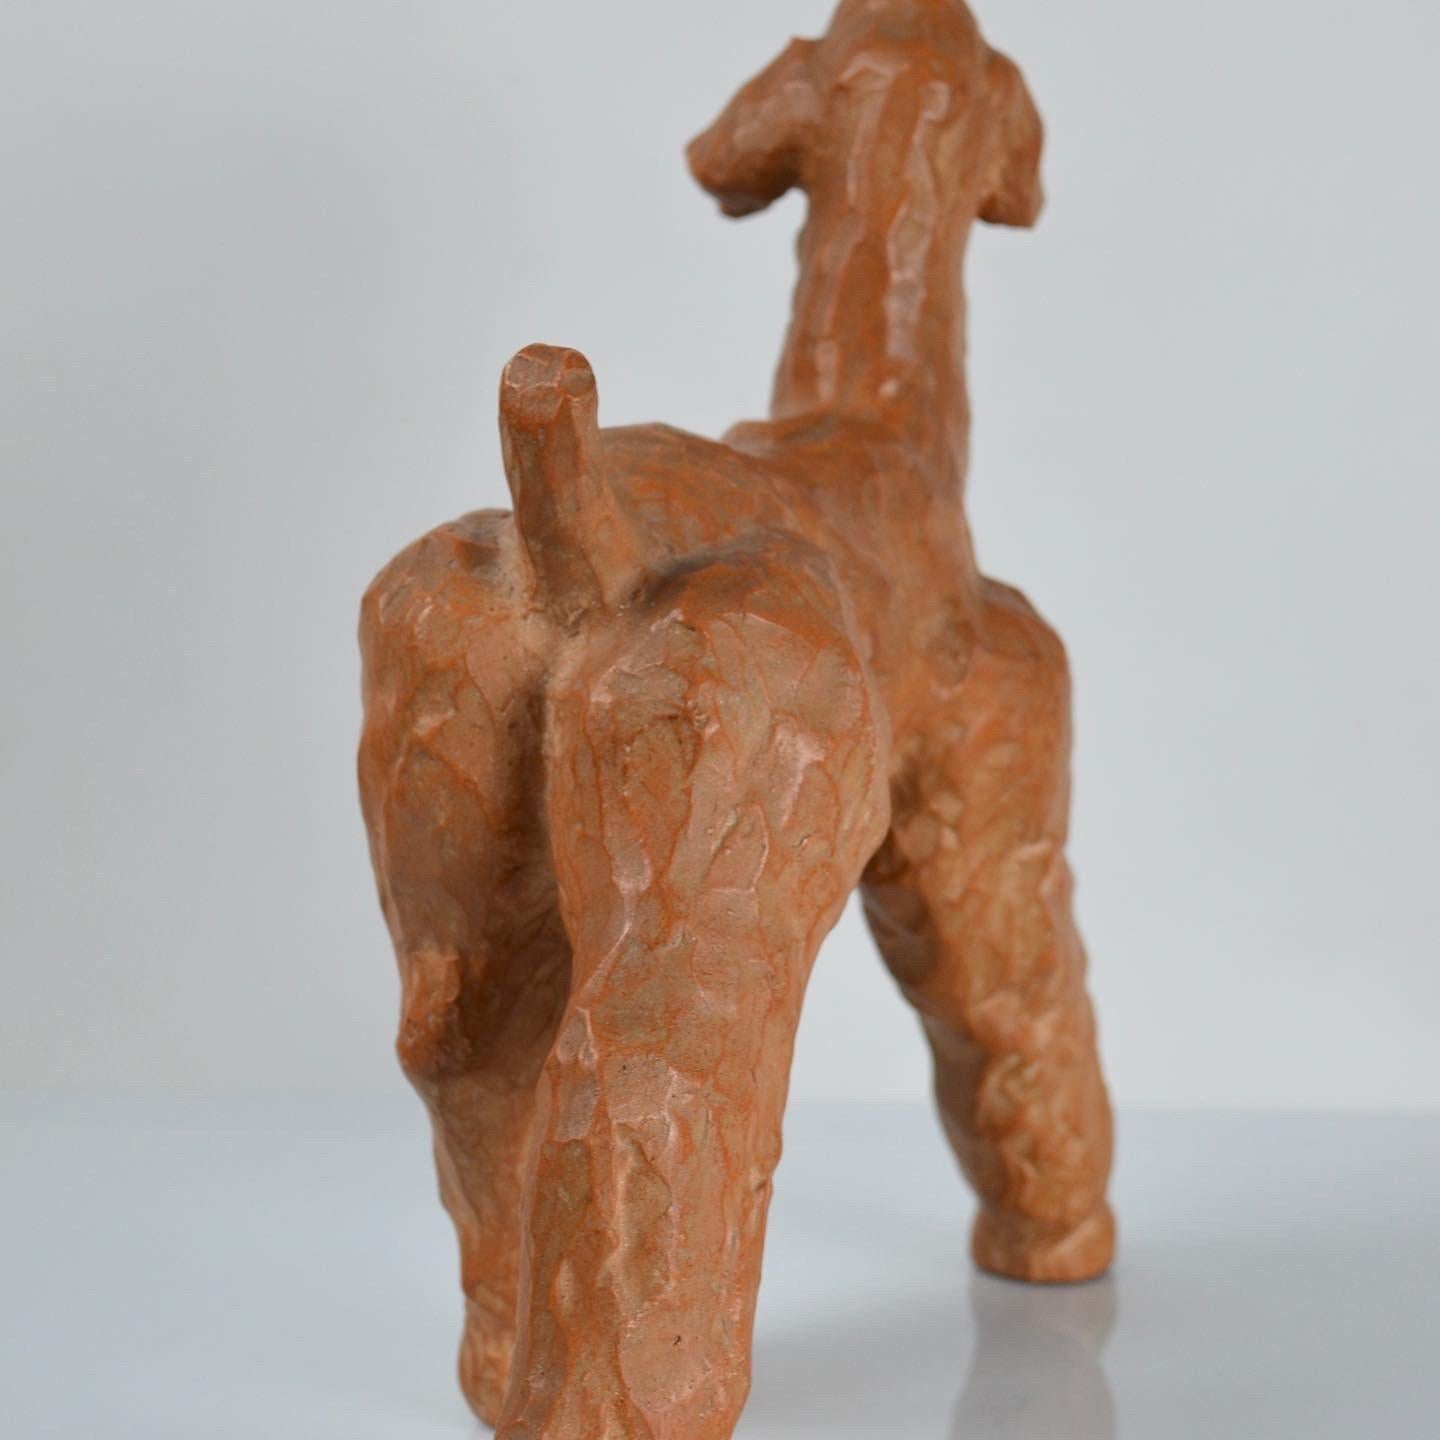 Terracotta dog sculpture 
Signed POL under the piece
25x27 cm